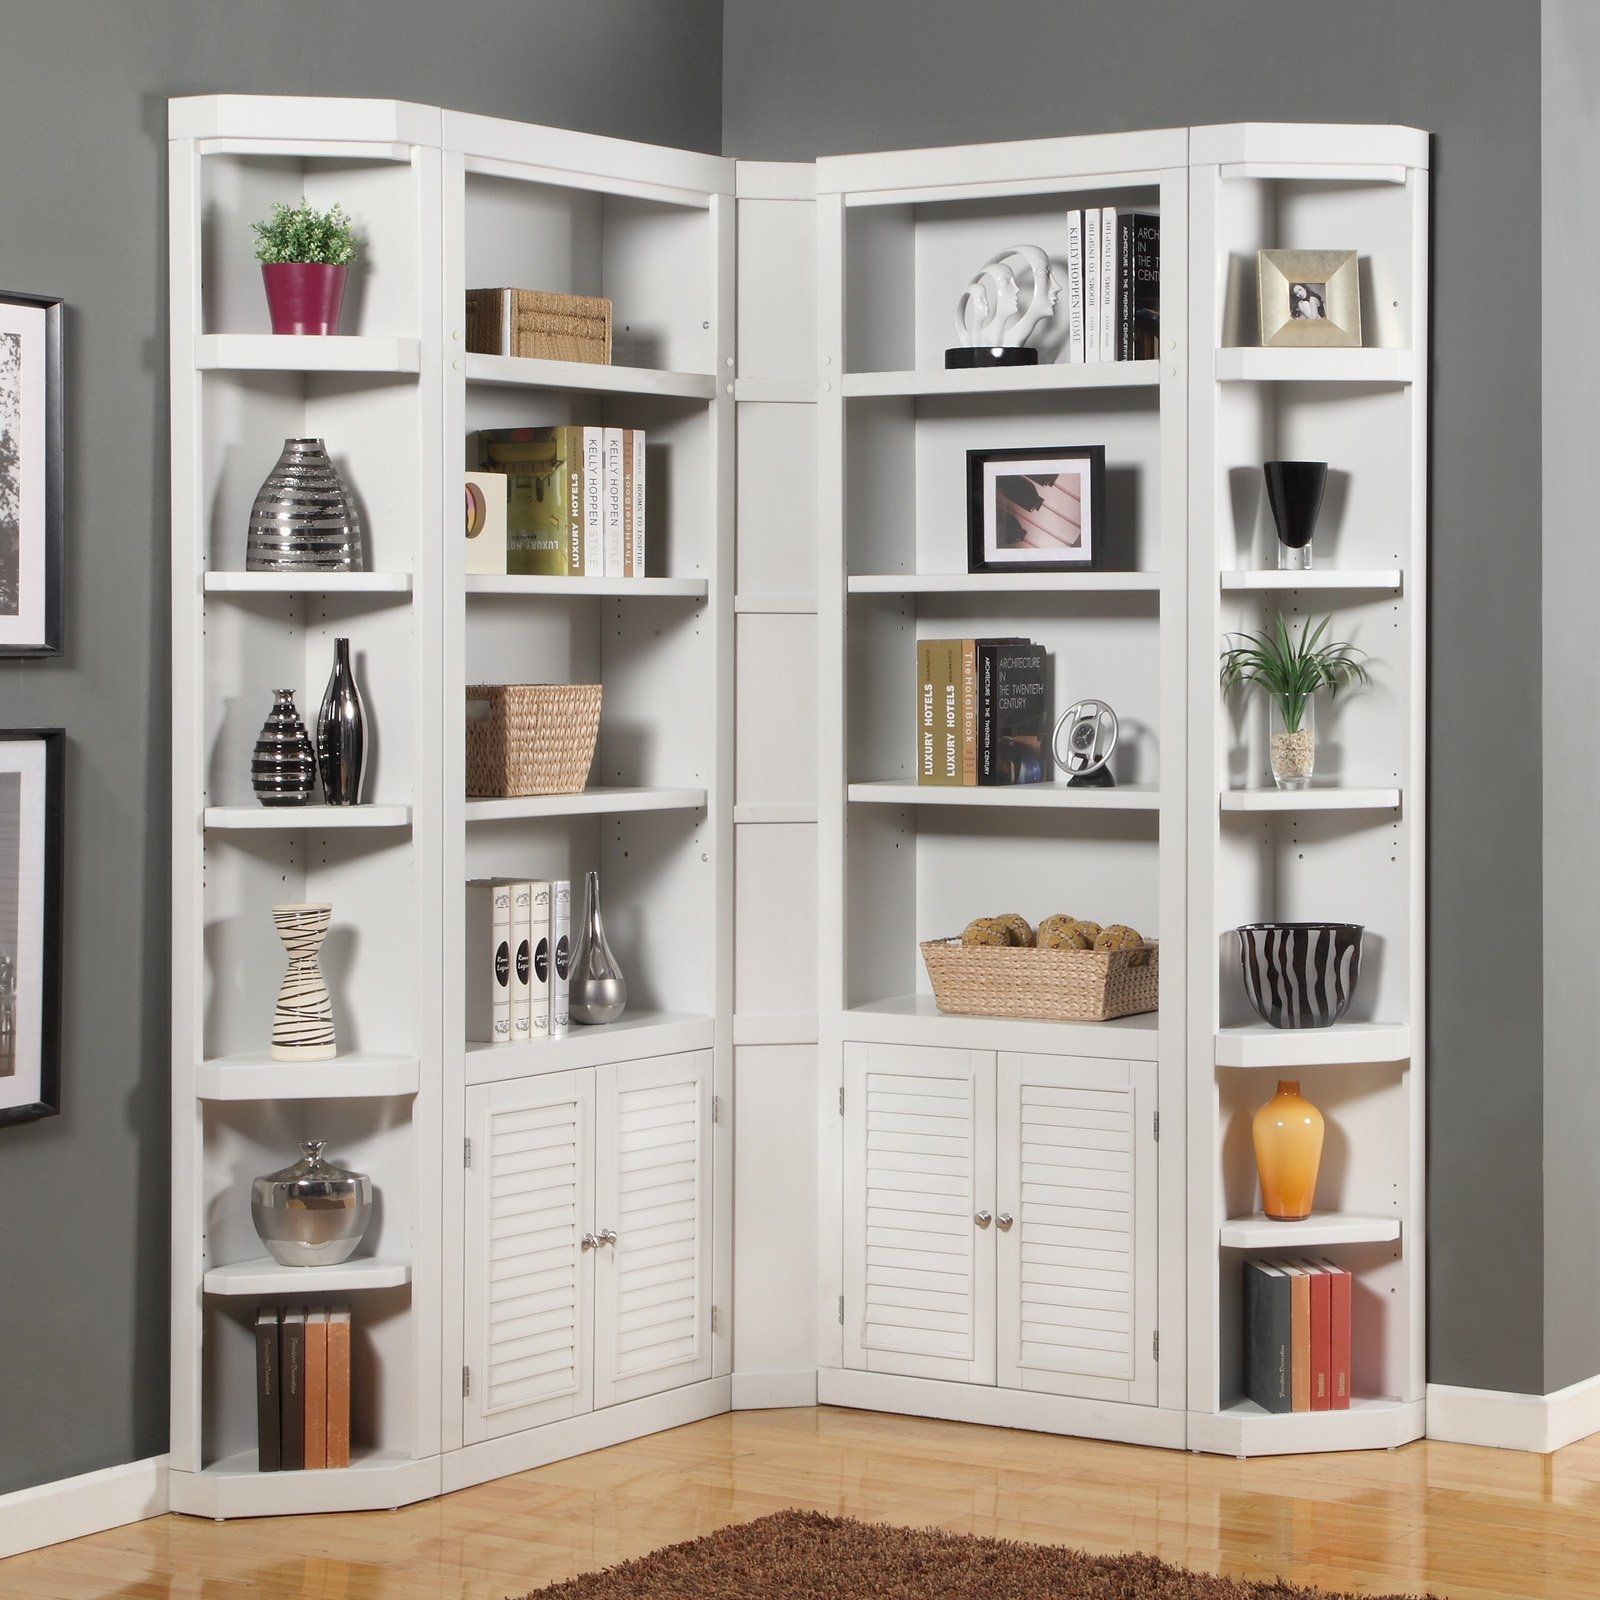 Fresh Elegant Traditional Bookshelf Decorating Ideas 23585 With Traditional Bookshelf Designs (View 12 of 15)